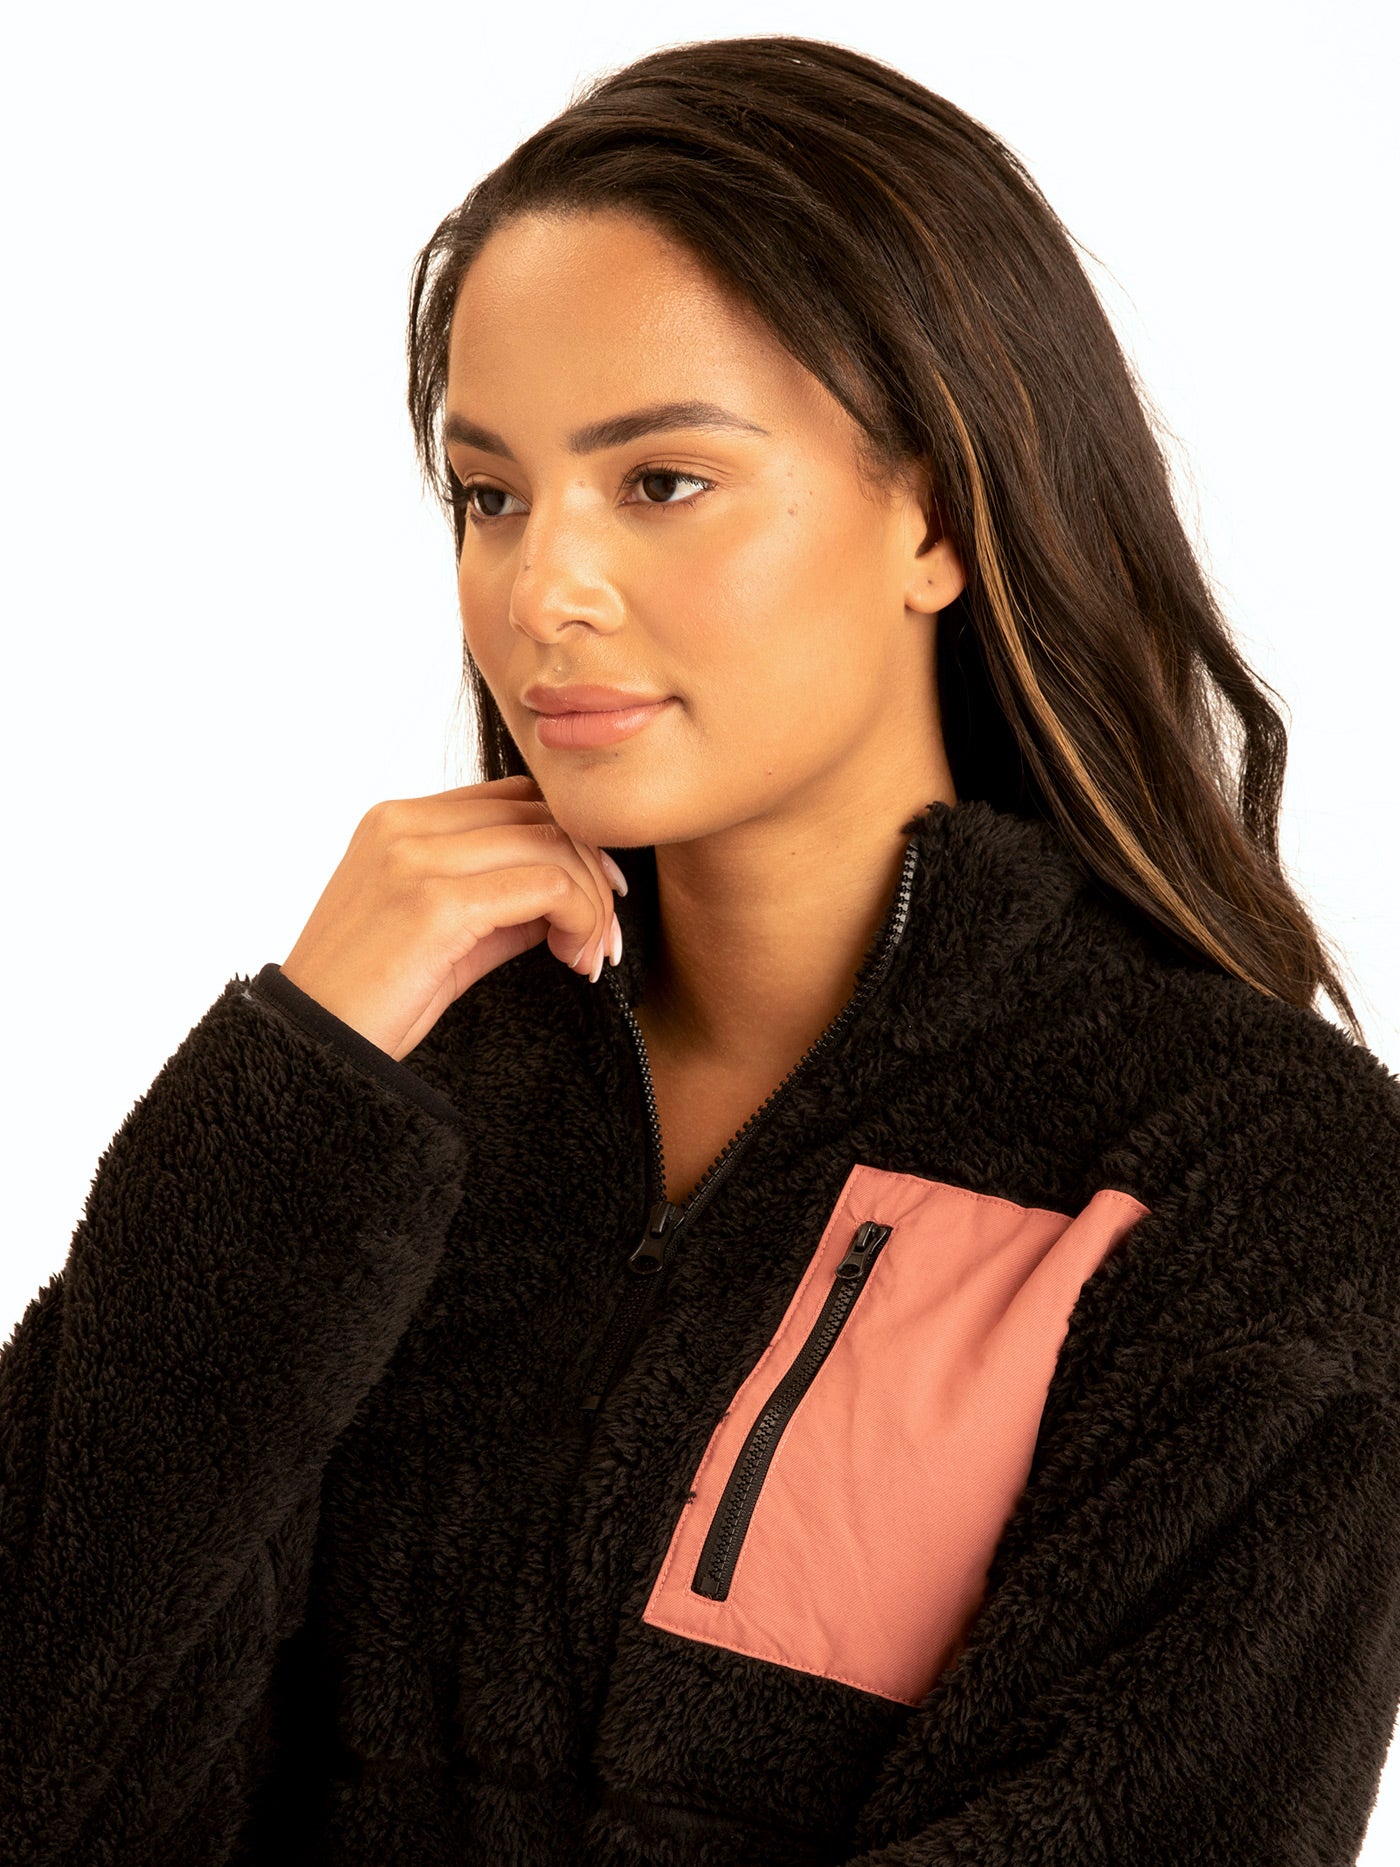 Katya Half-Zip Pullover Womens Outerwear Sweatshirt Threads 4 Thought 